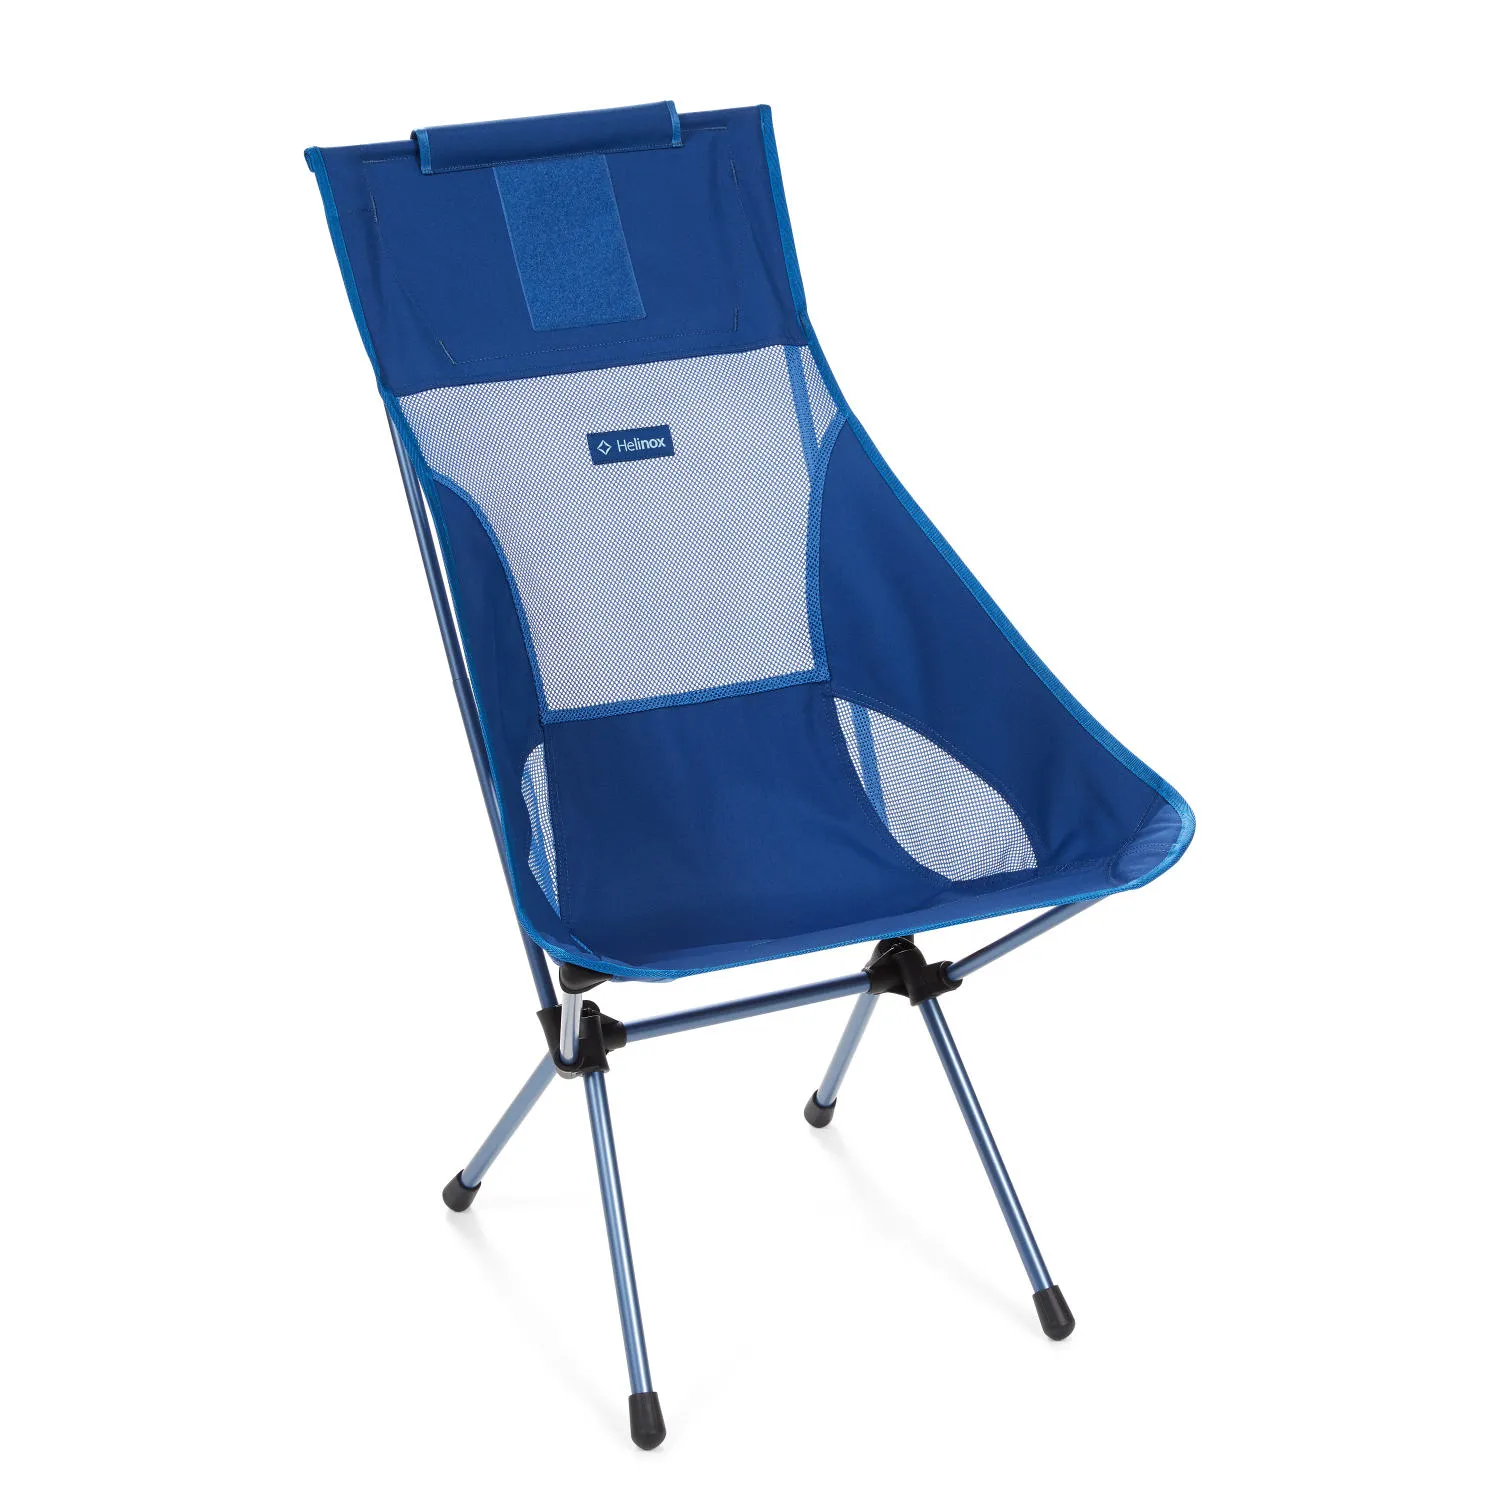 11160R1_Helinox_191001R1_Sunset-Chair_Blue-Block_Angle-Front_01.jpg